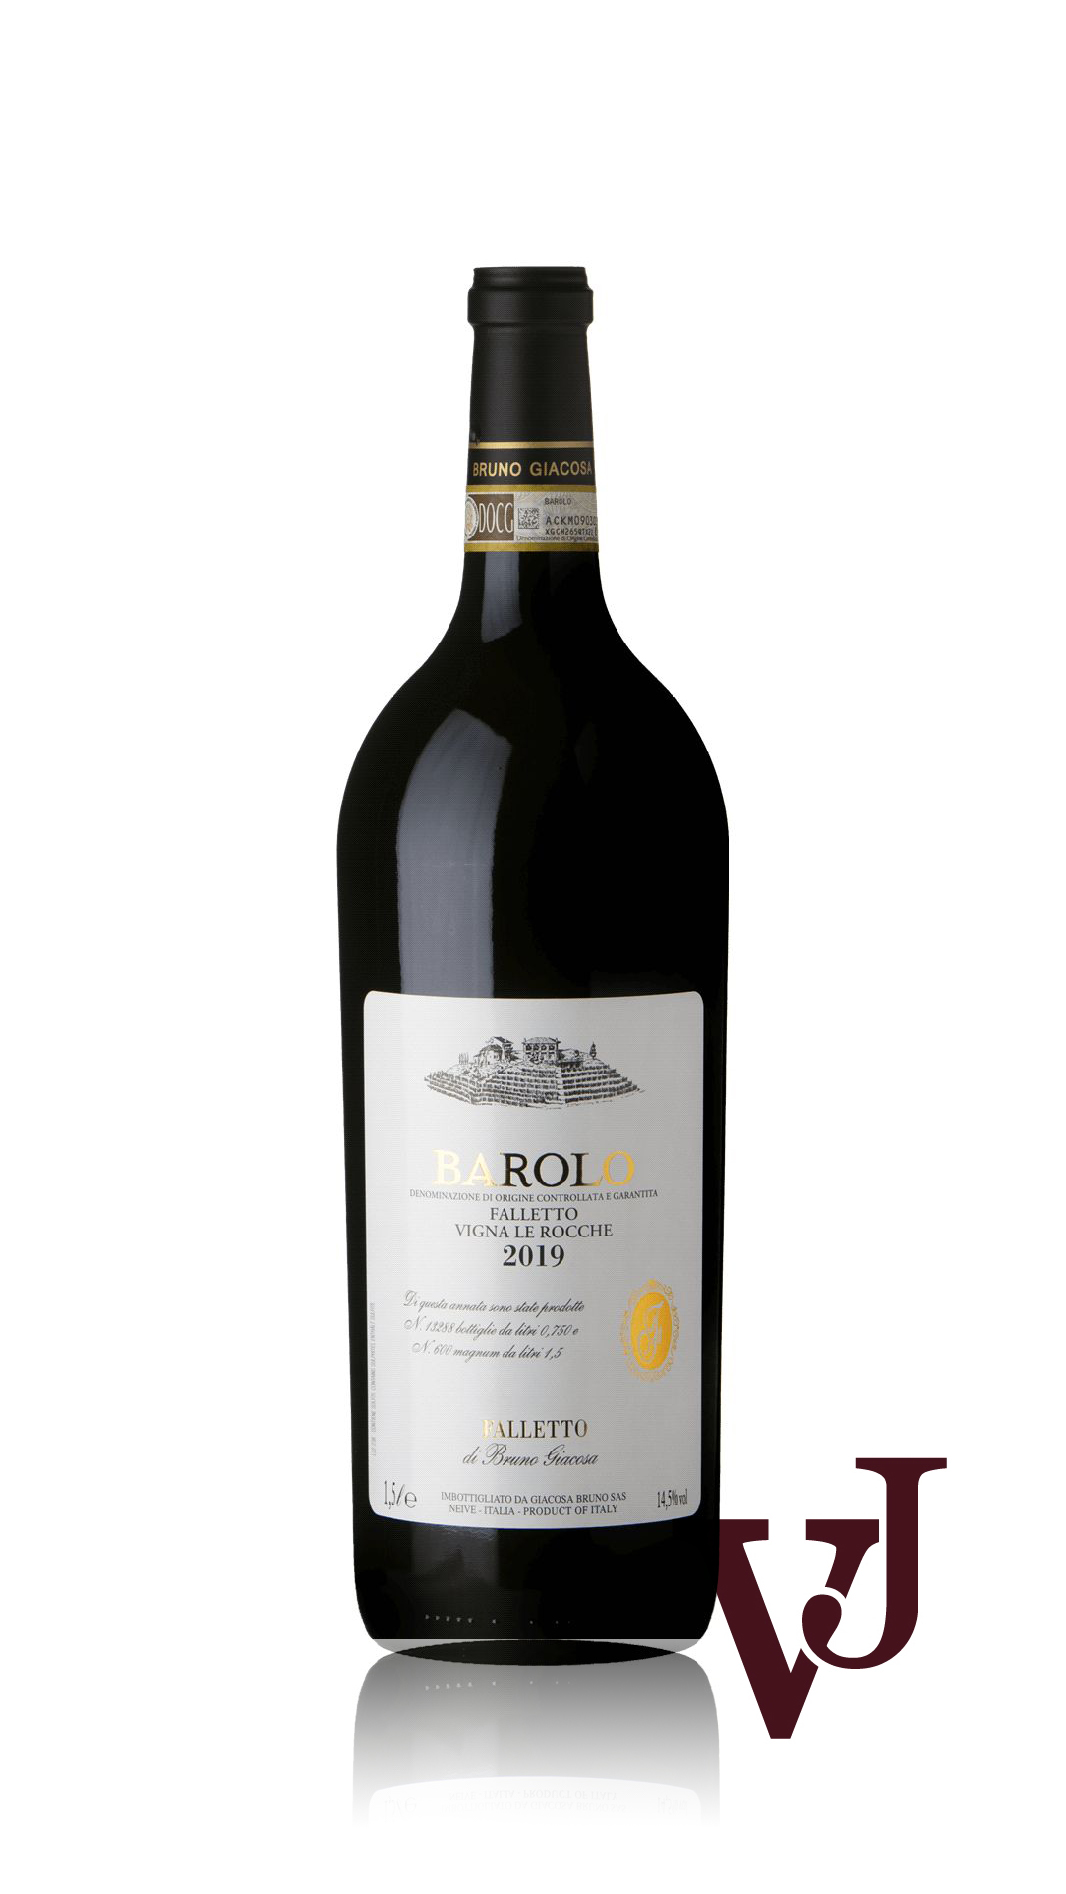 Rött vin - Barolo Falletto Vigna le Rocche 2019 artikel nummer 9131606 från producenten Azienda Agricola Falleto från Italien